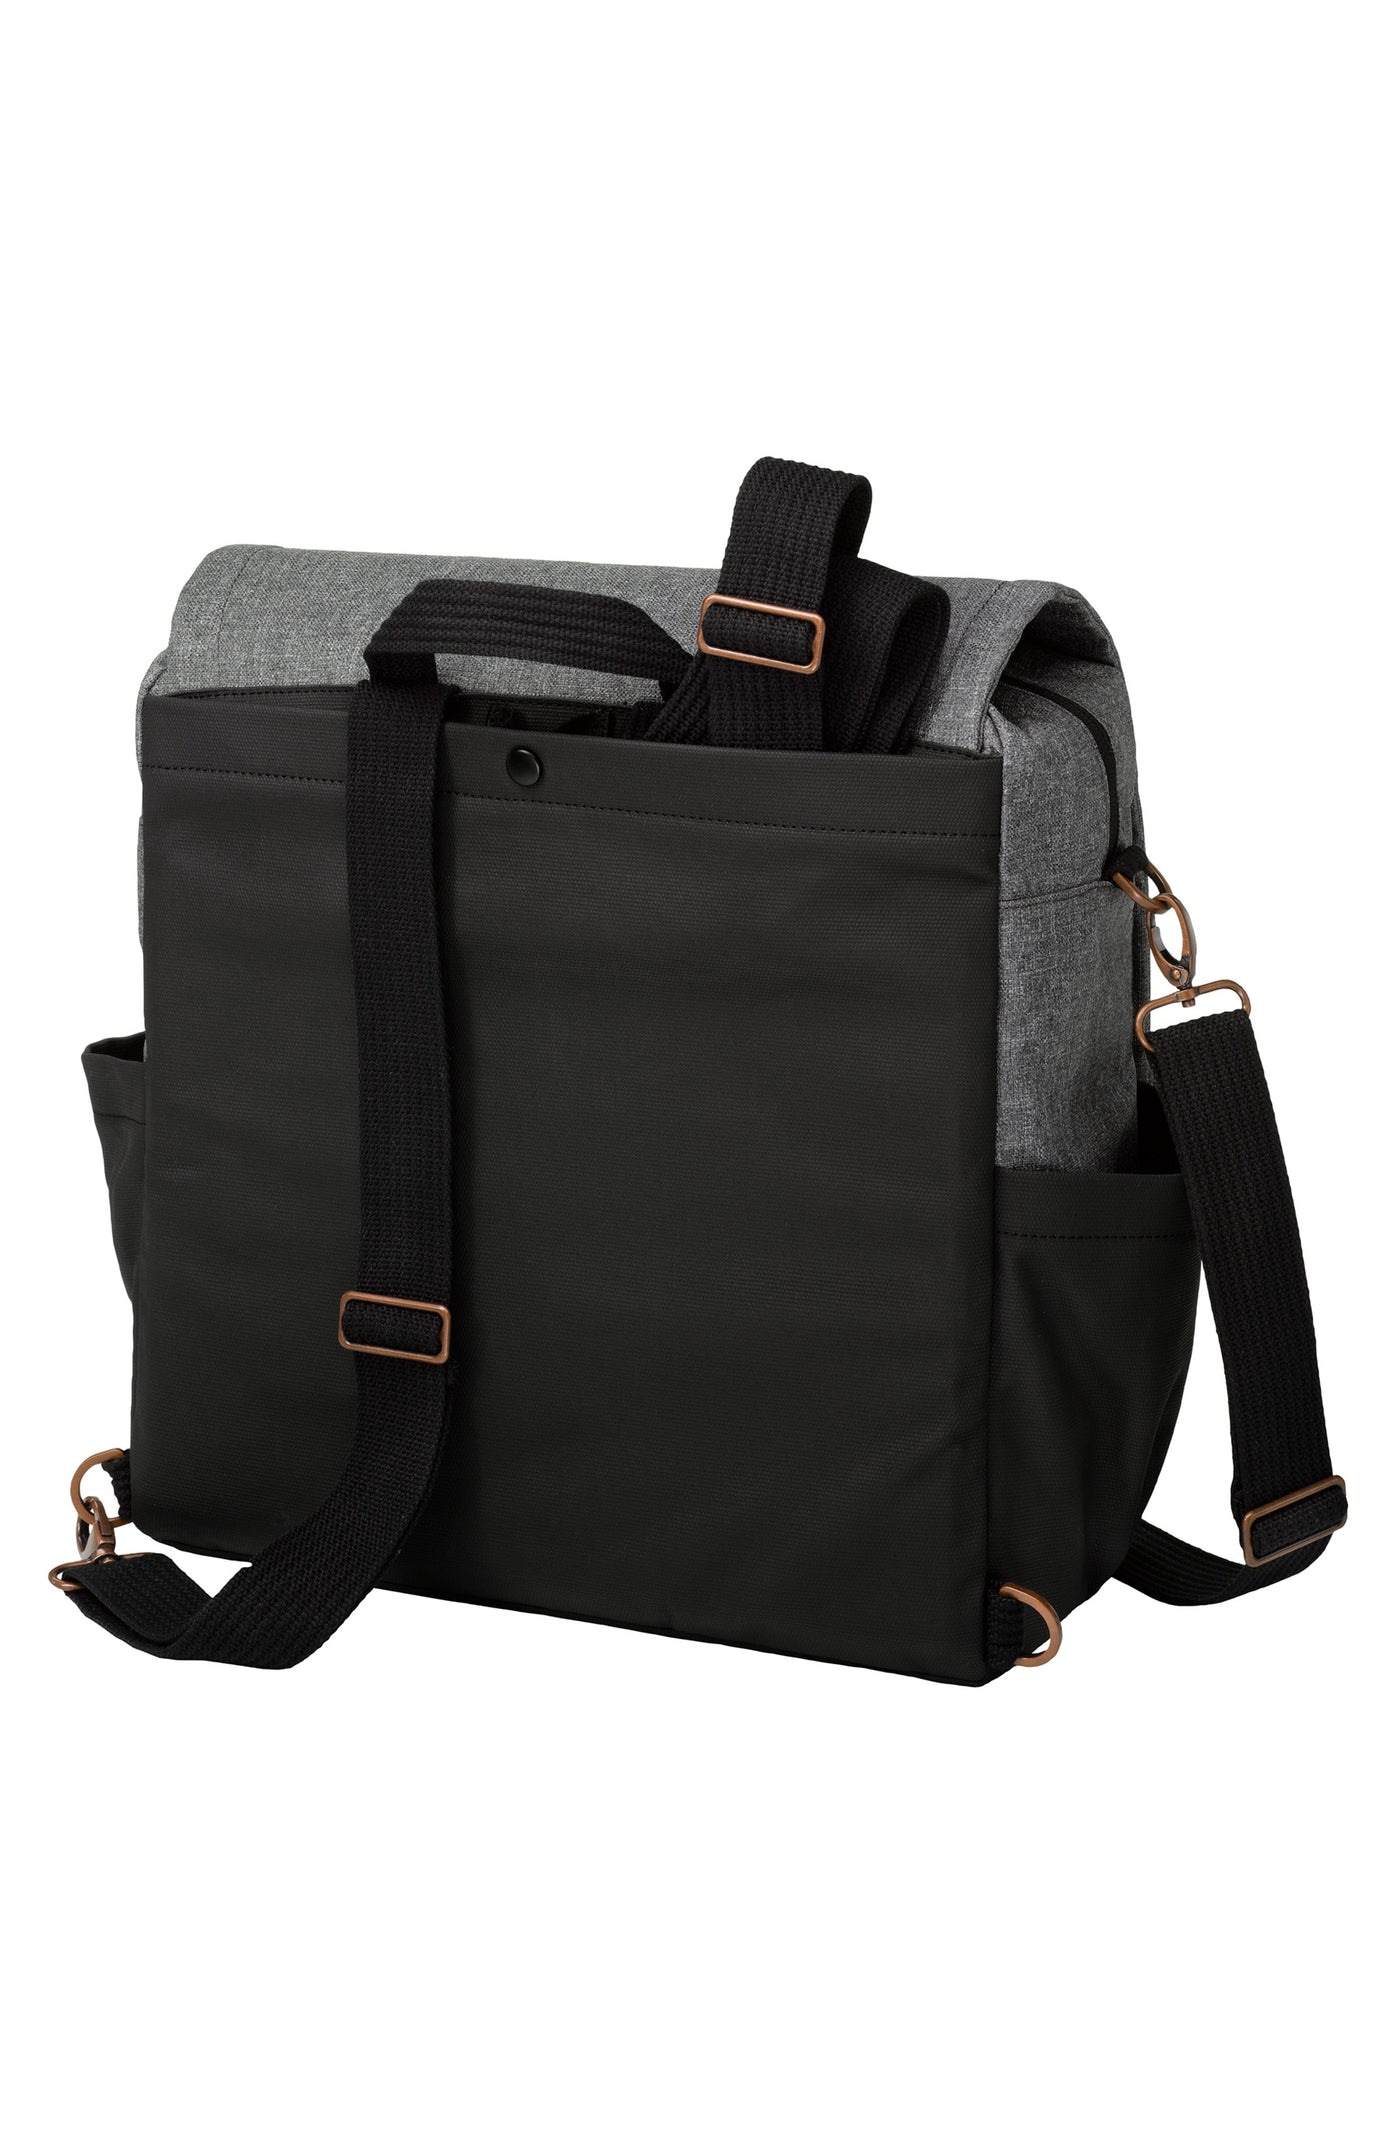 Petunia Pickle Bottom - Boxy Backpack in Graphite/Black Colorblock